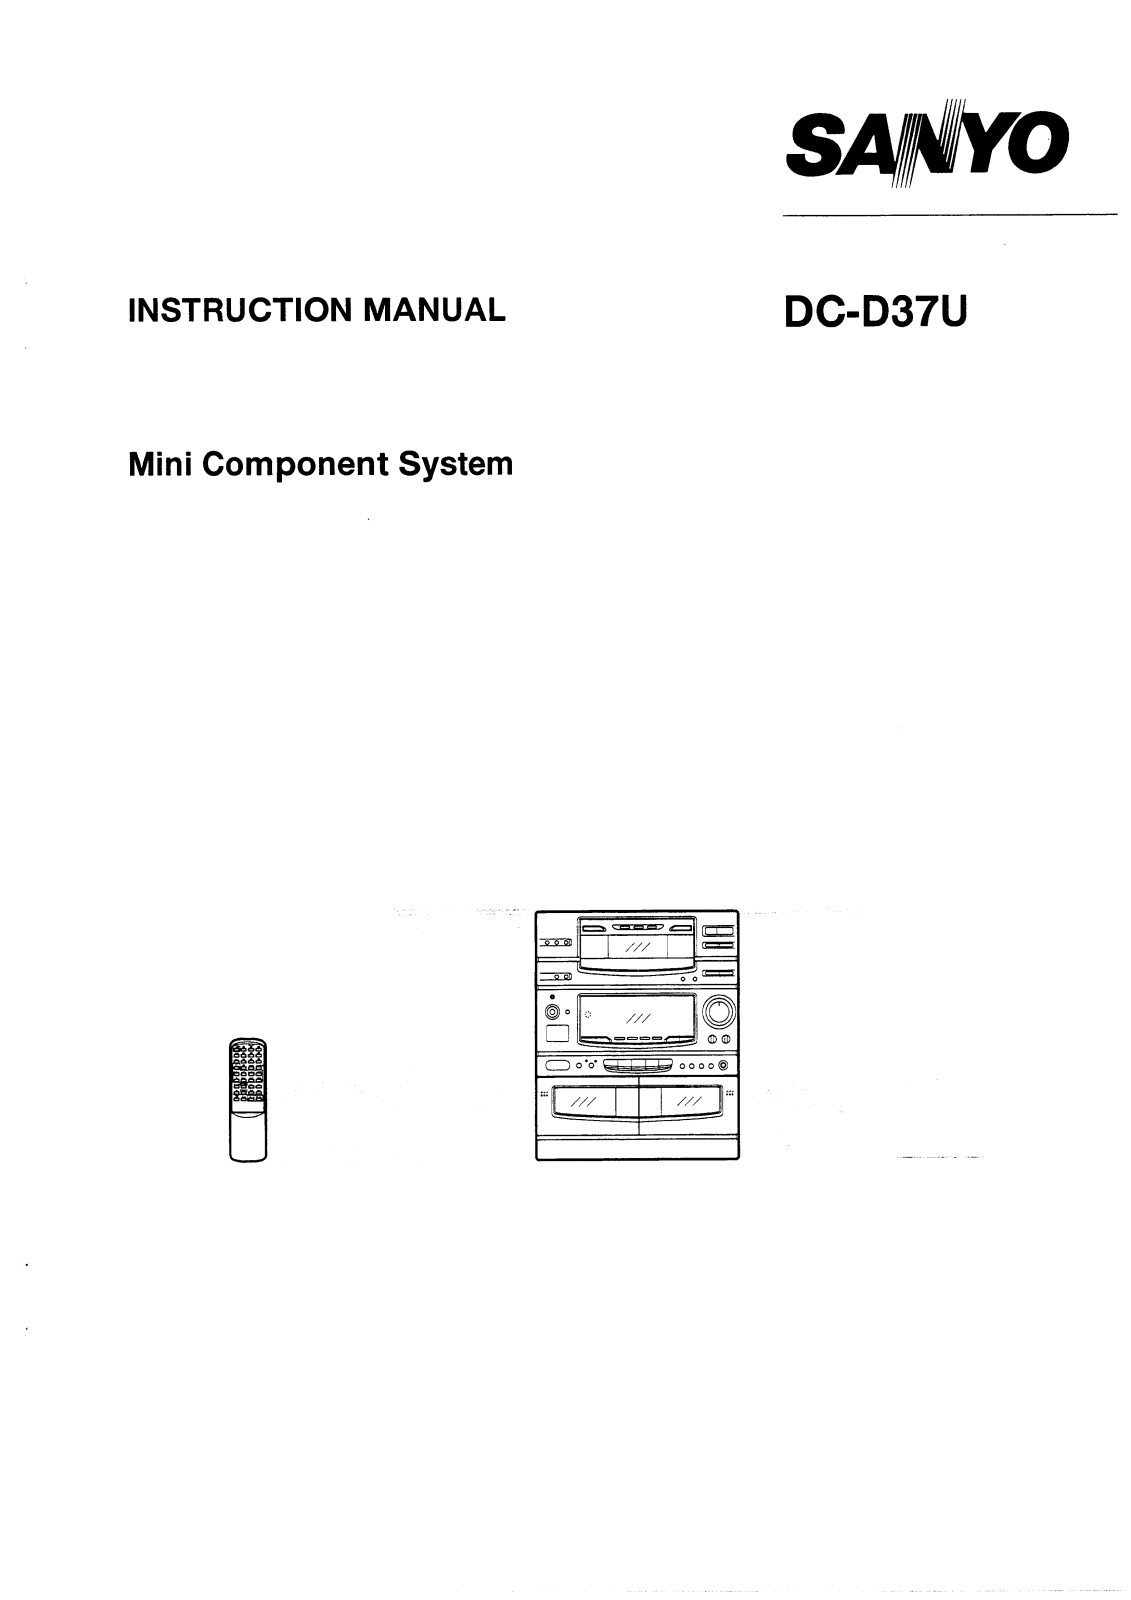 Sanyo DC-D37U Instruction Manual